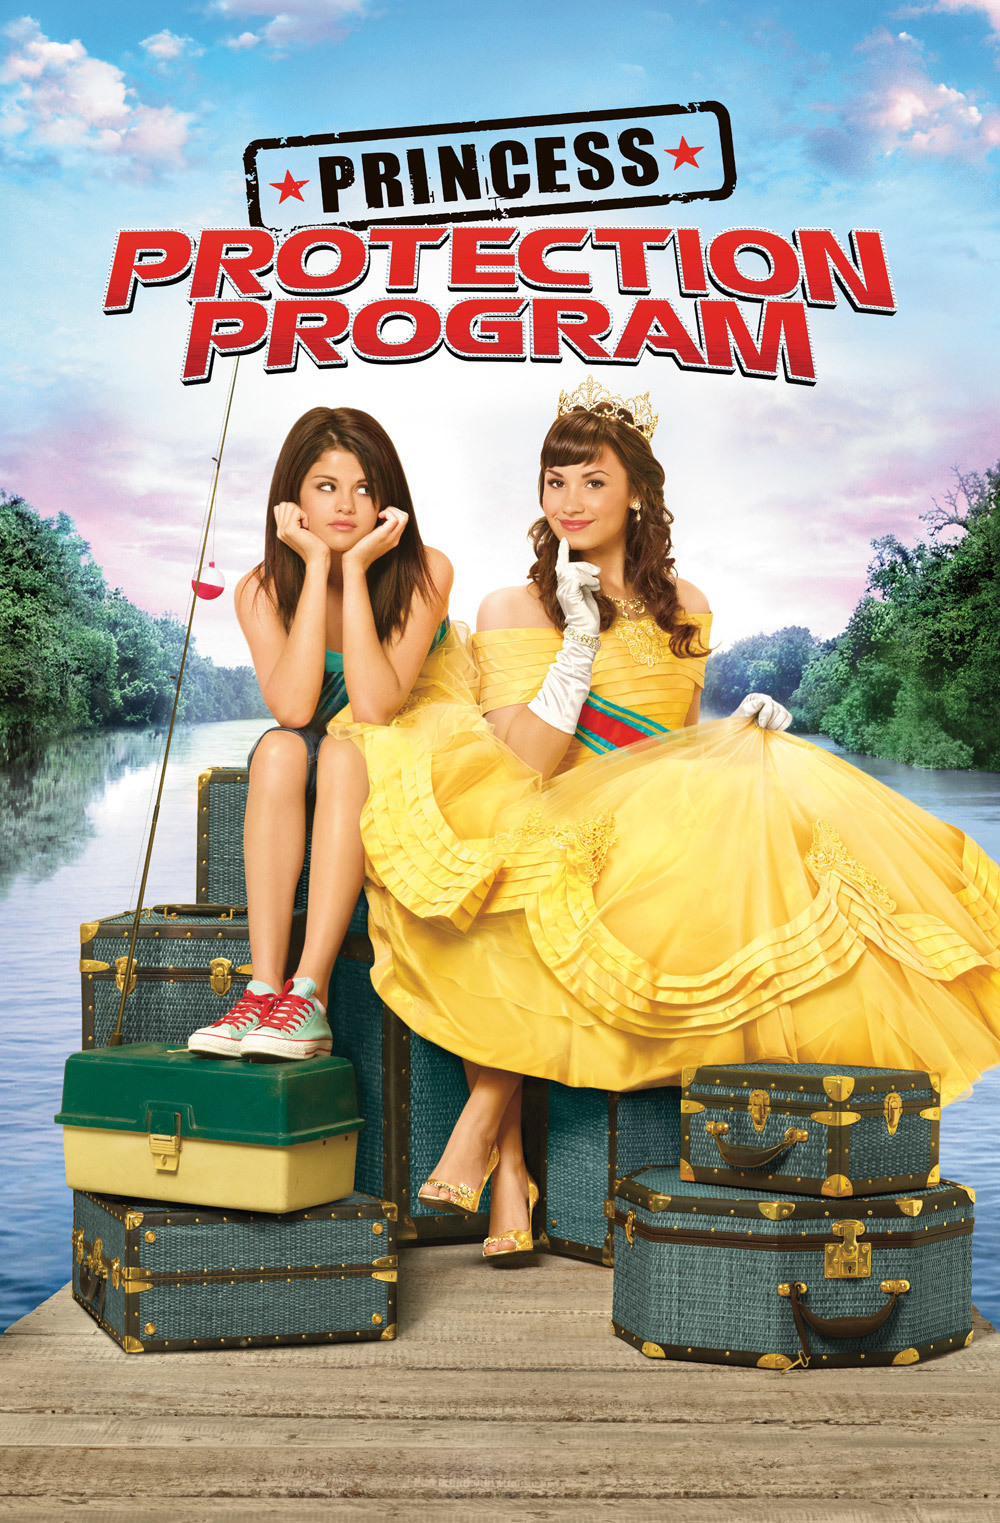 Program Disney Channel